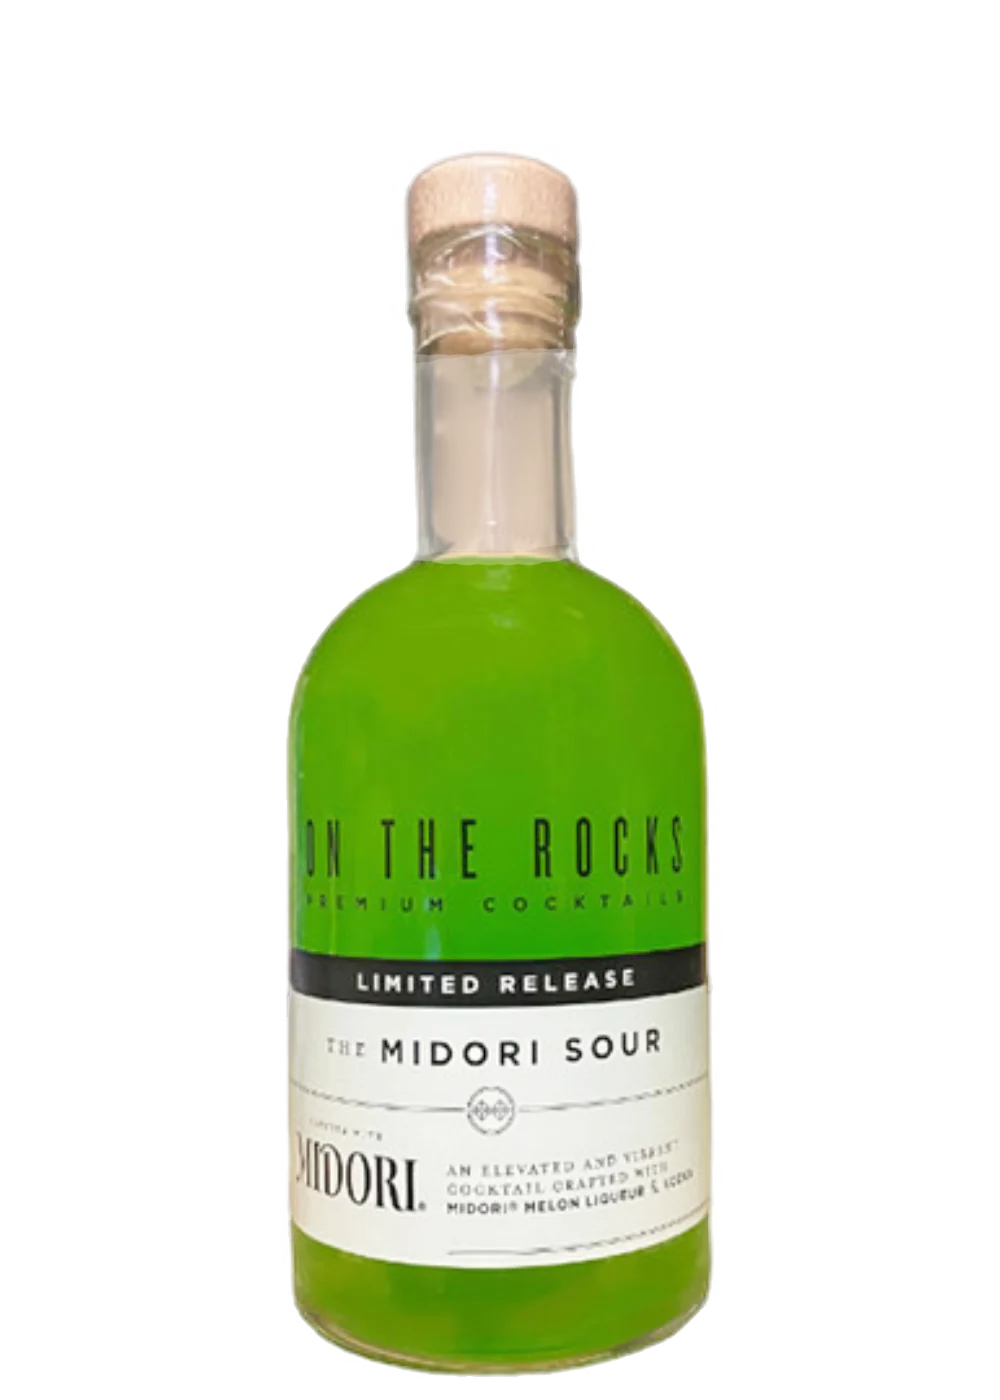 On The Rocks Premium Cocktails Midori Sour